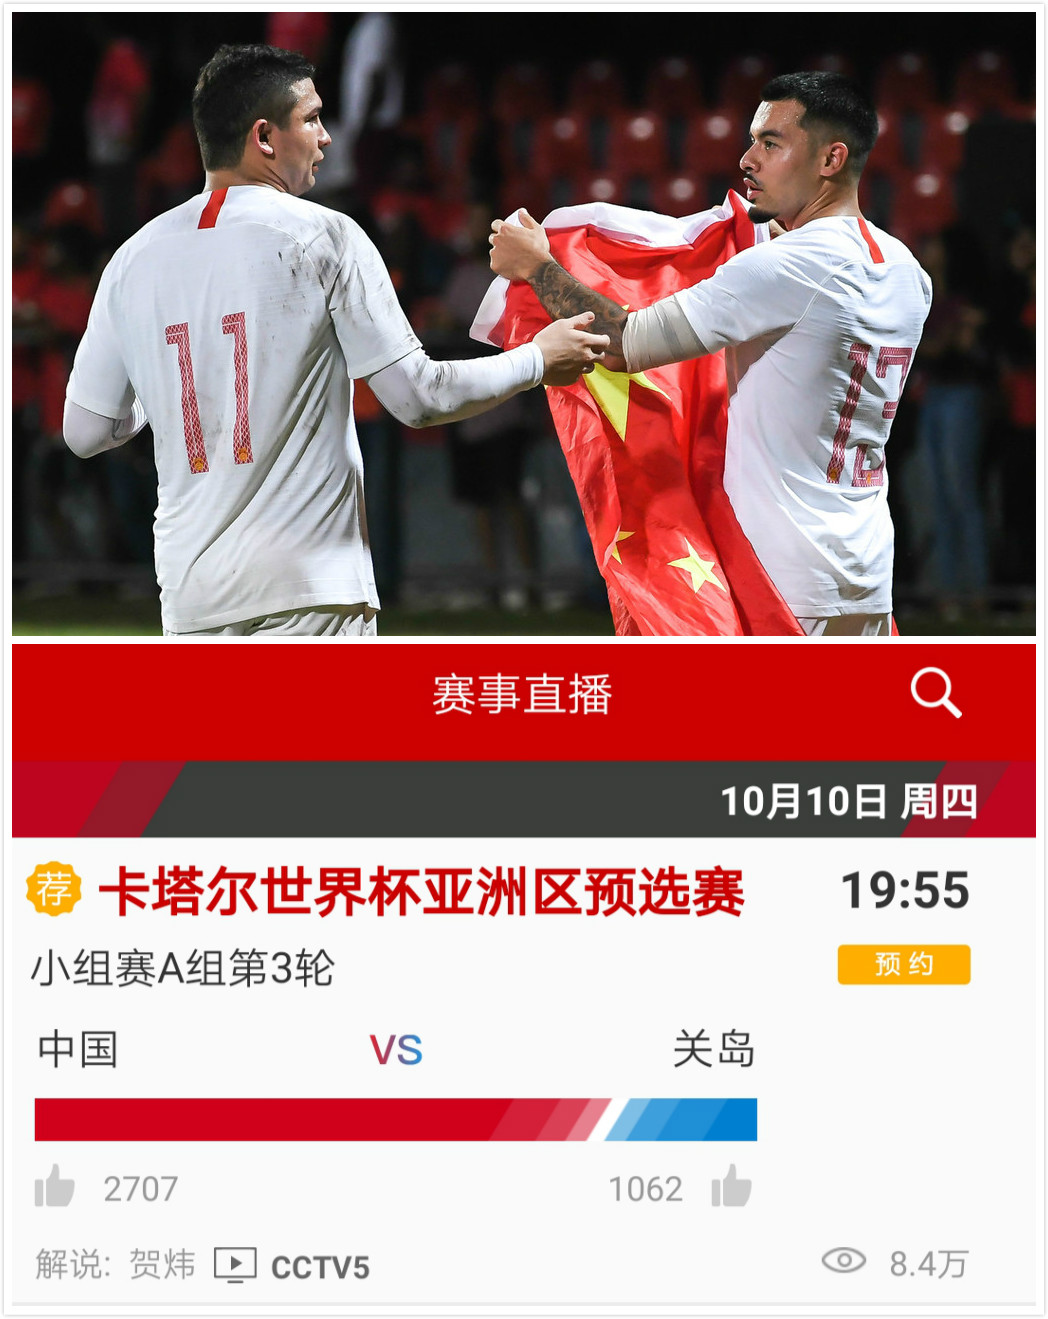 cctv5在线直播观看国足比赛(央视CCTV5直播世预赛 国足主场战关岛 看中国队能赢对手多少个呢)